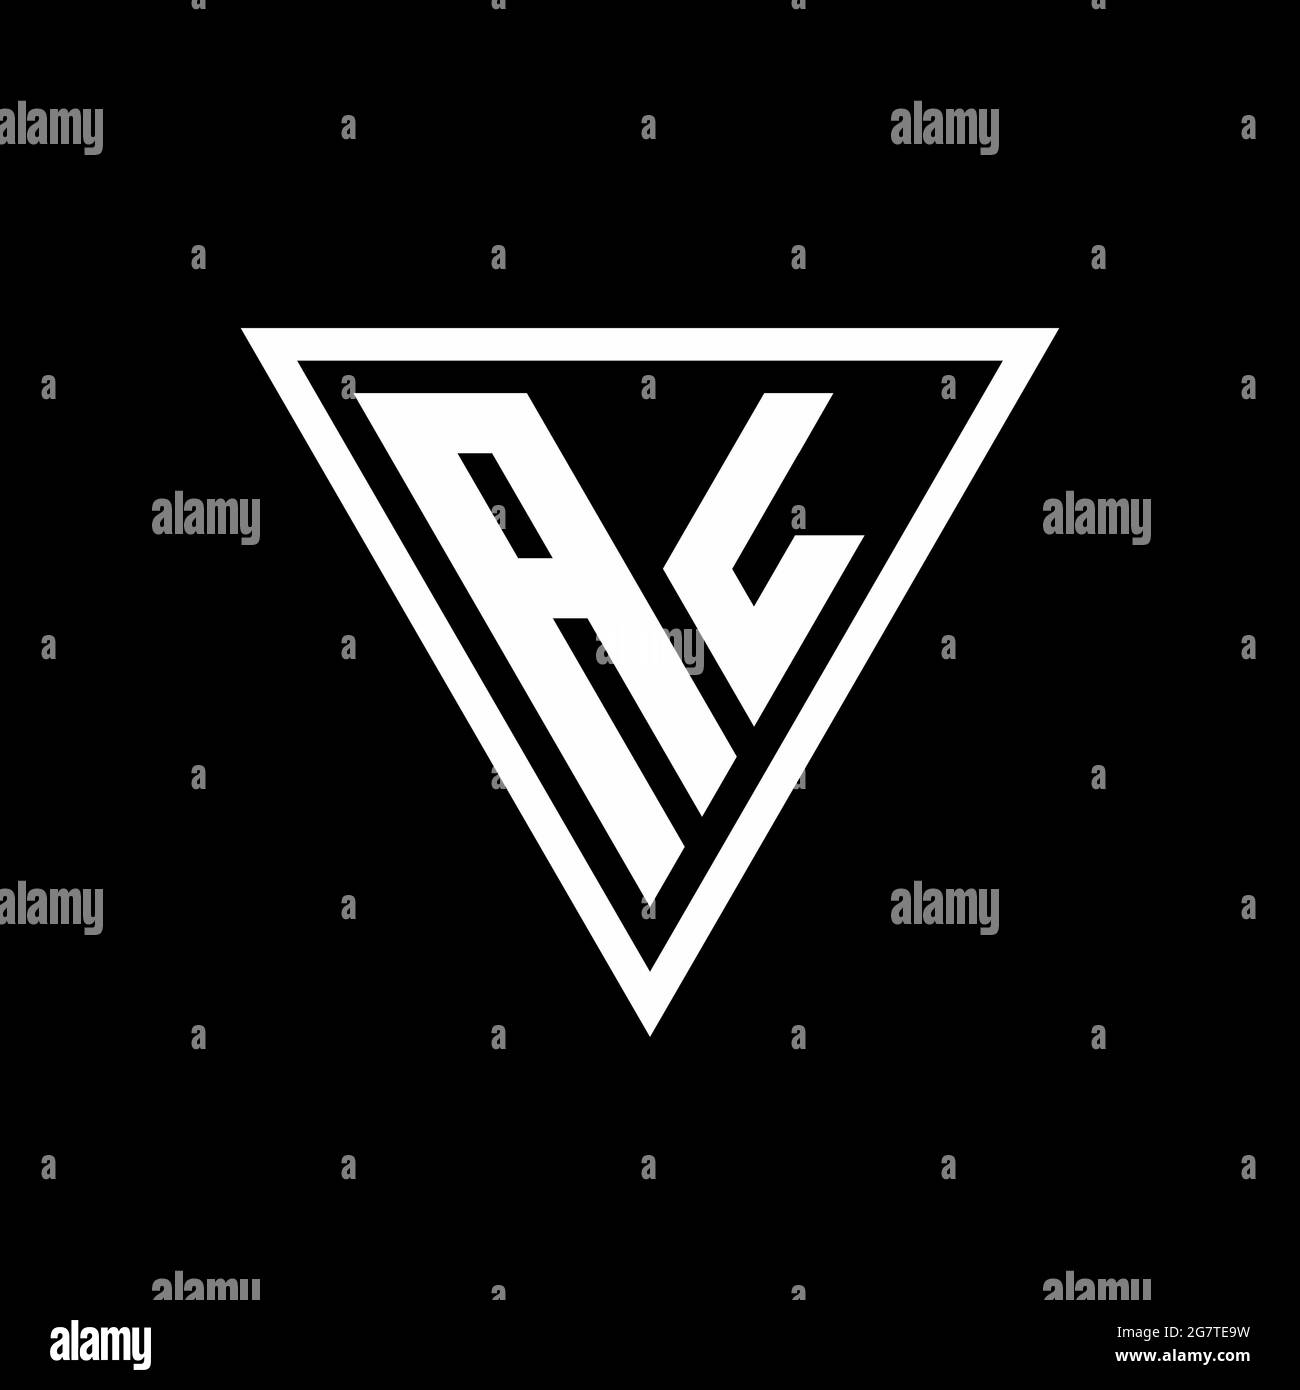 AL Logo monogram with tirangle shape isolated on black background geometric vector icon Stock Vector